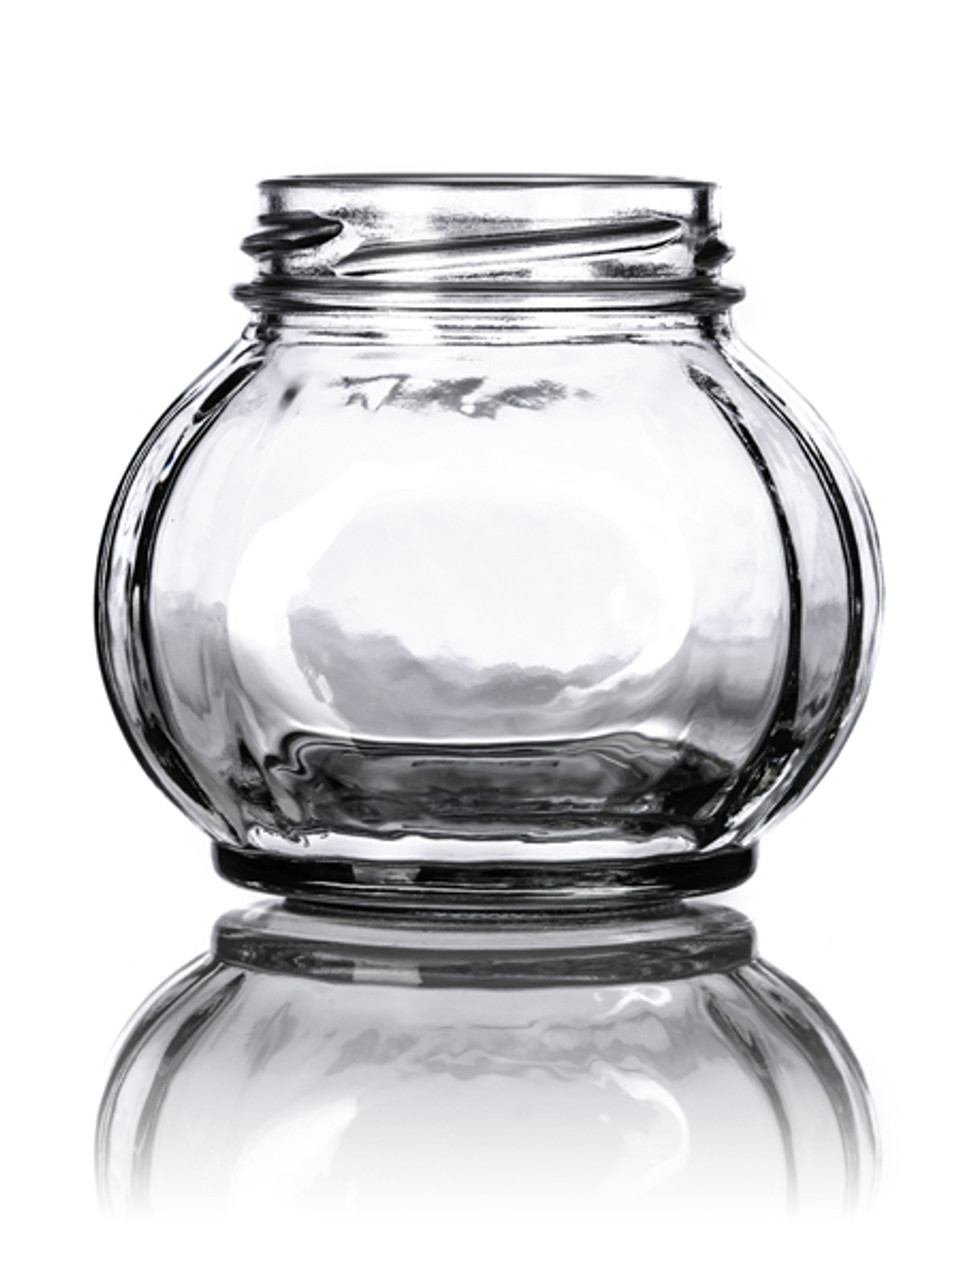 2oz Clear Glass SS Jar 53-400(120/case)